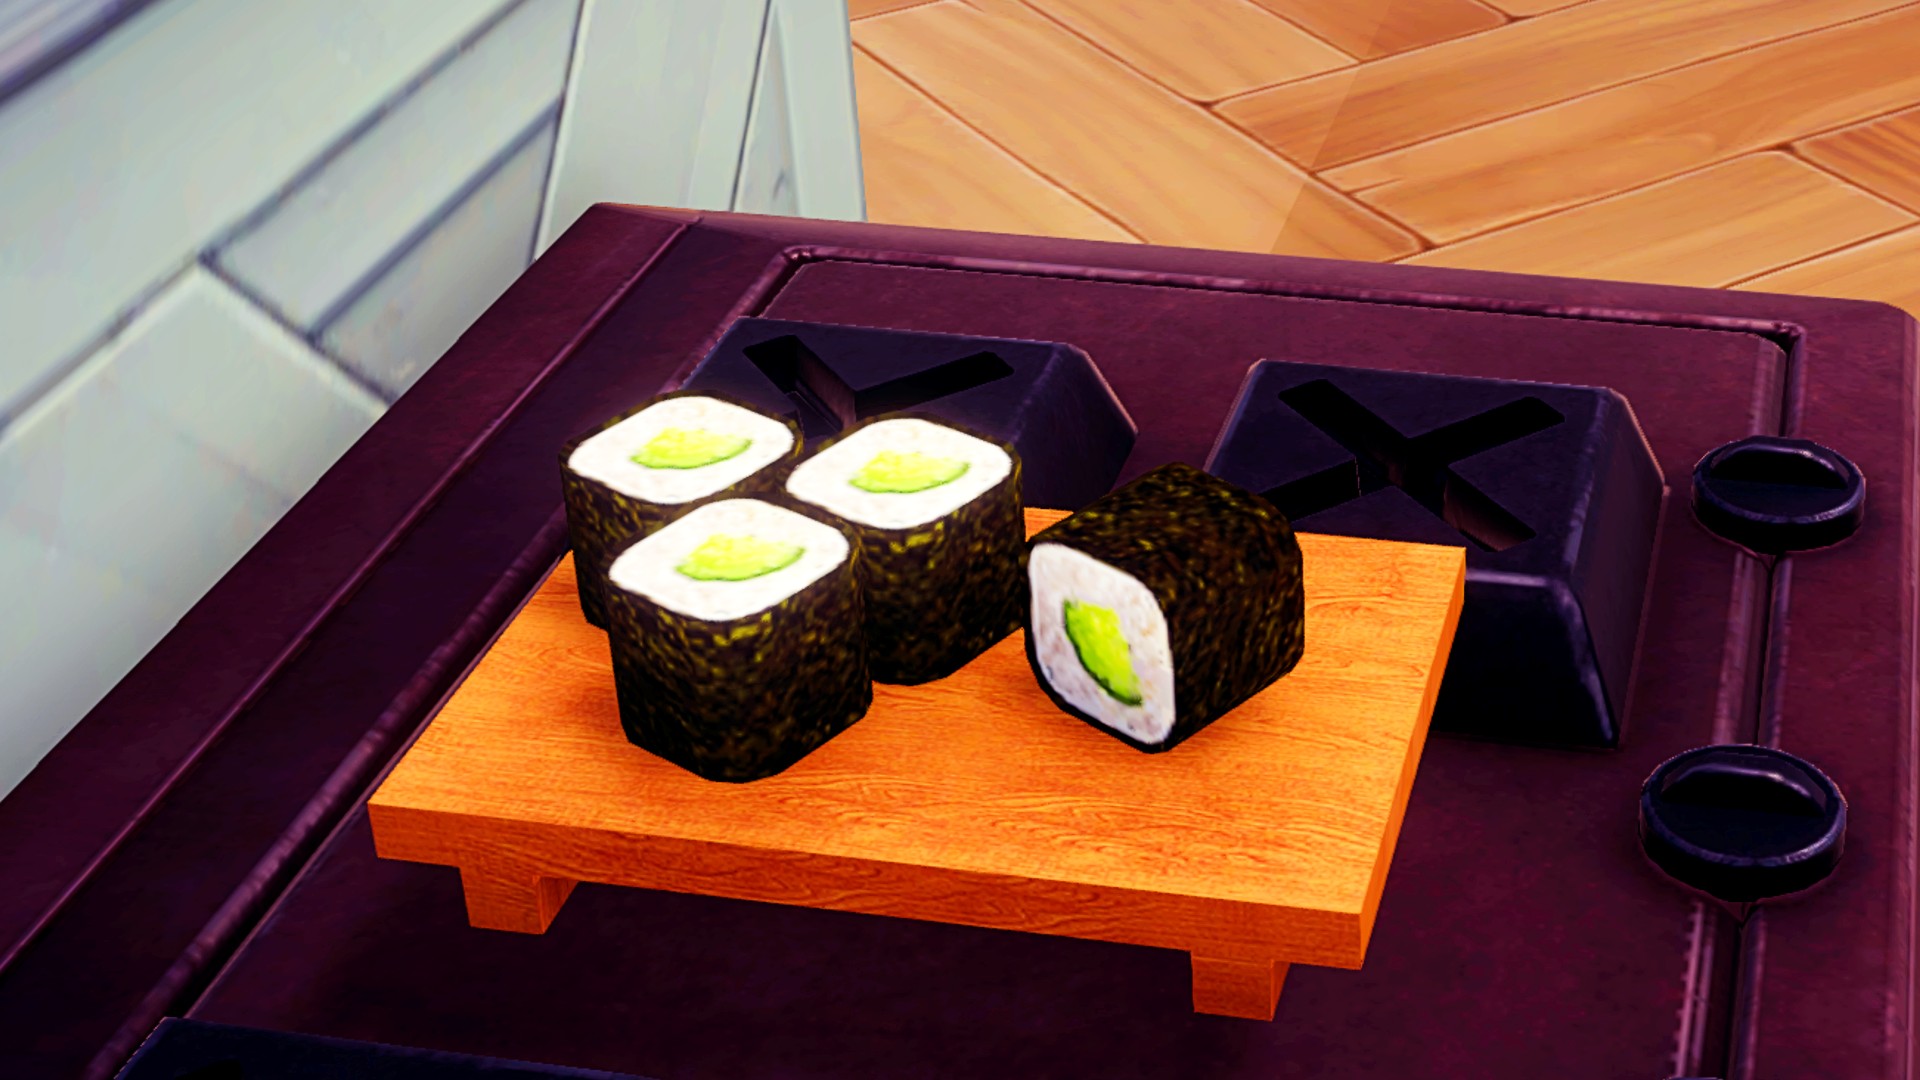 Disney Dreamlight Valley three star recipes: Kappa Maki, four pieces of kappa maki sushi sit on a wooden sushi platter.